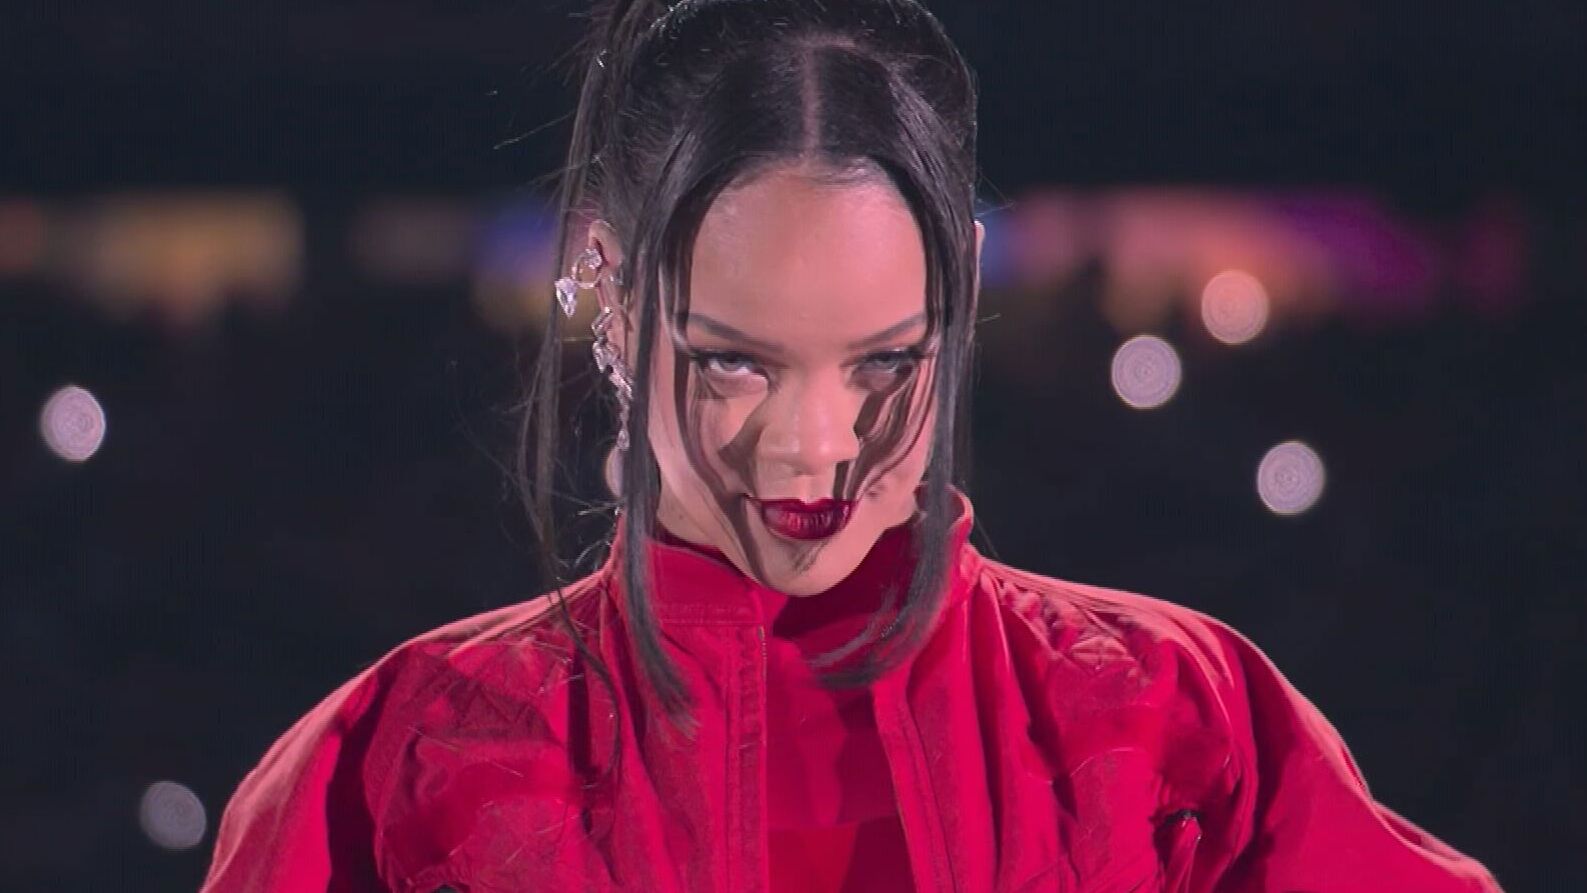 Rihanna Super Bowl performance